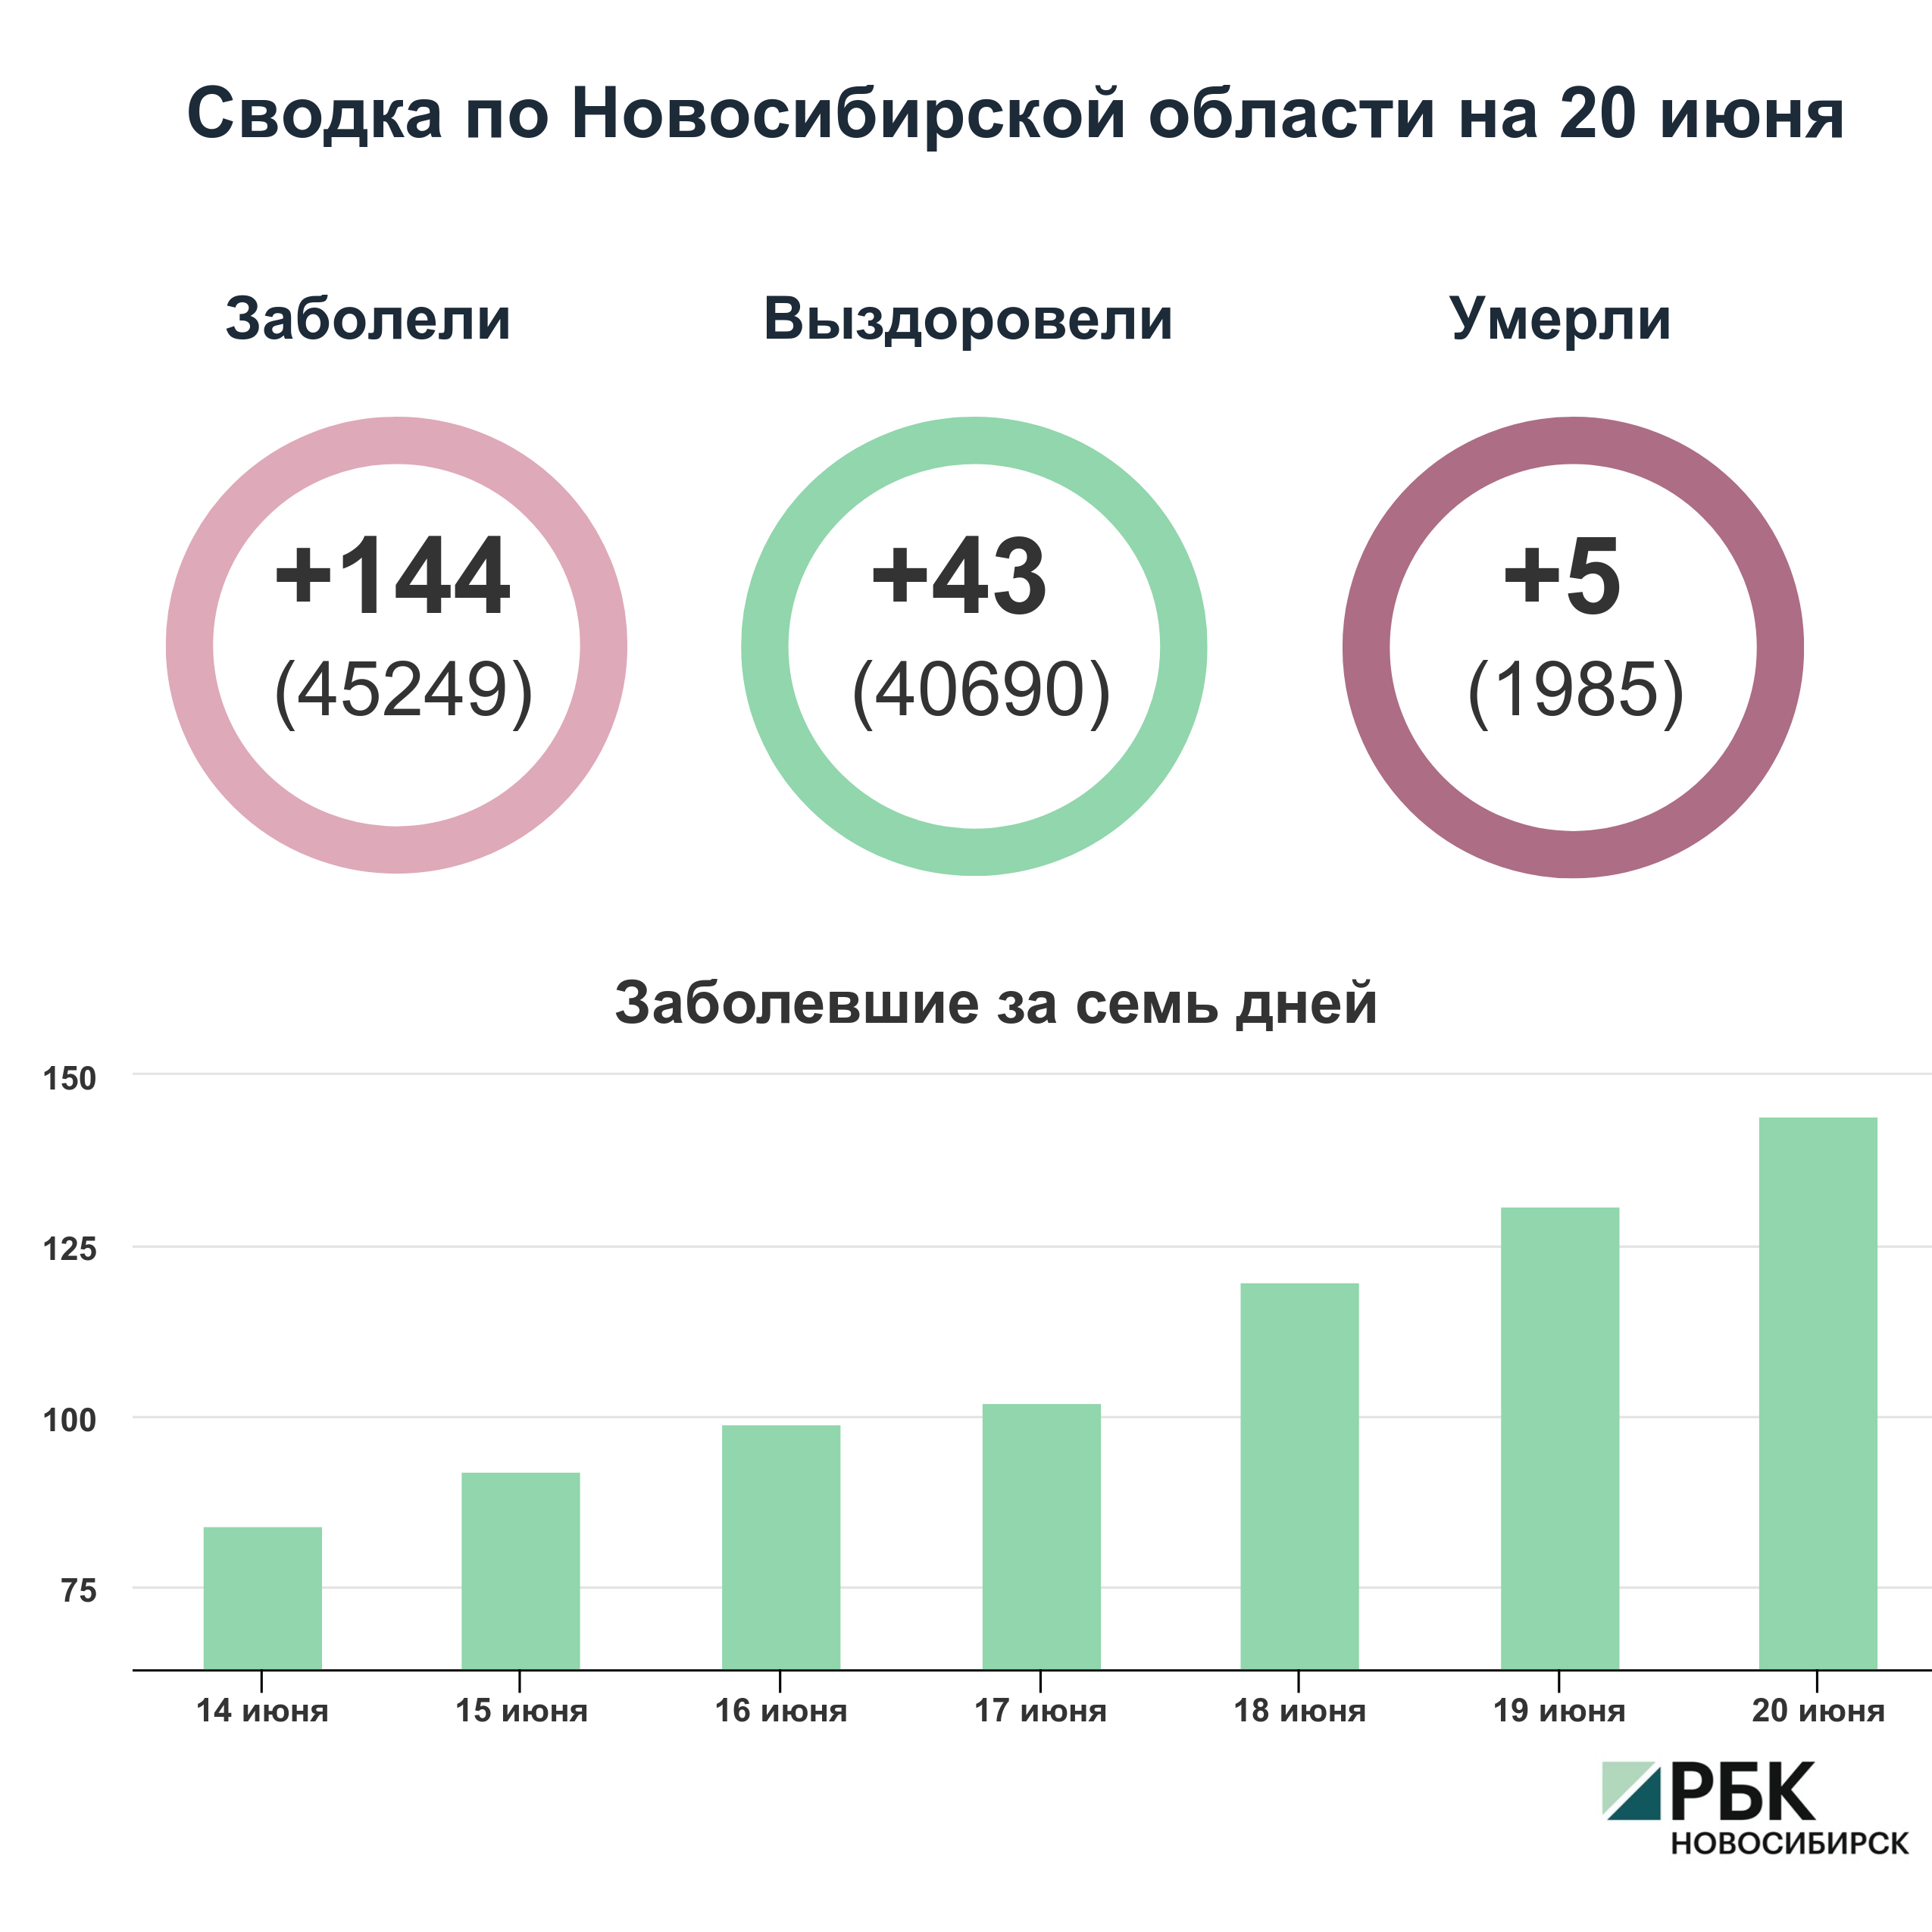 Коронавирус в Новосибирске: сводка на 20 июня